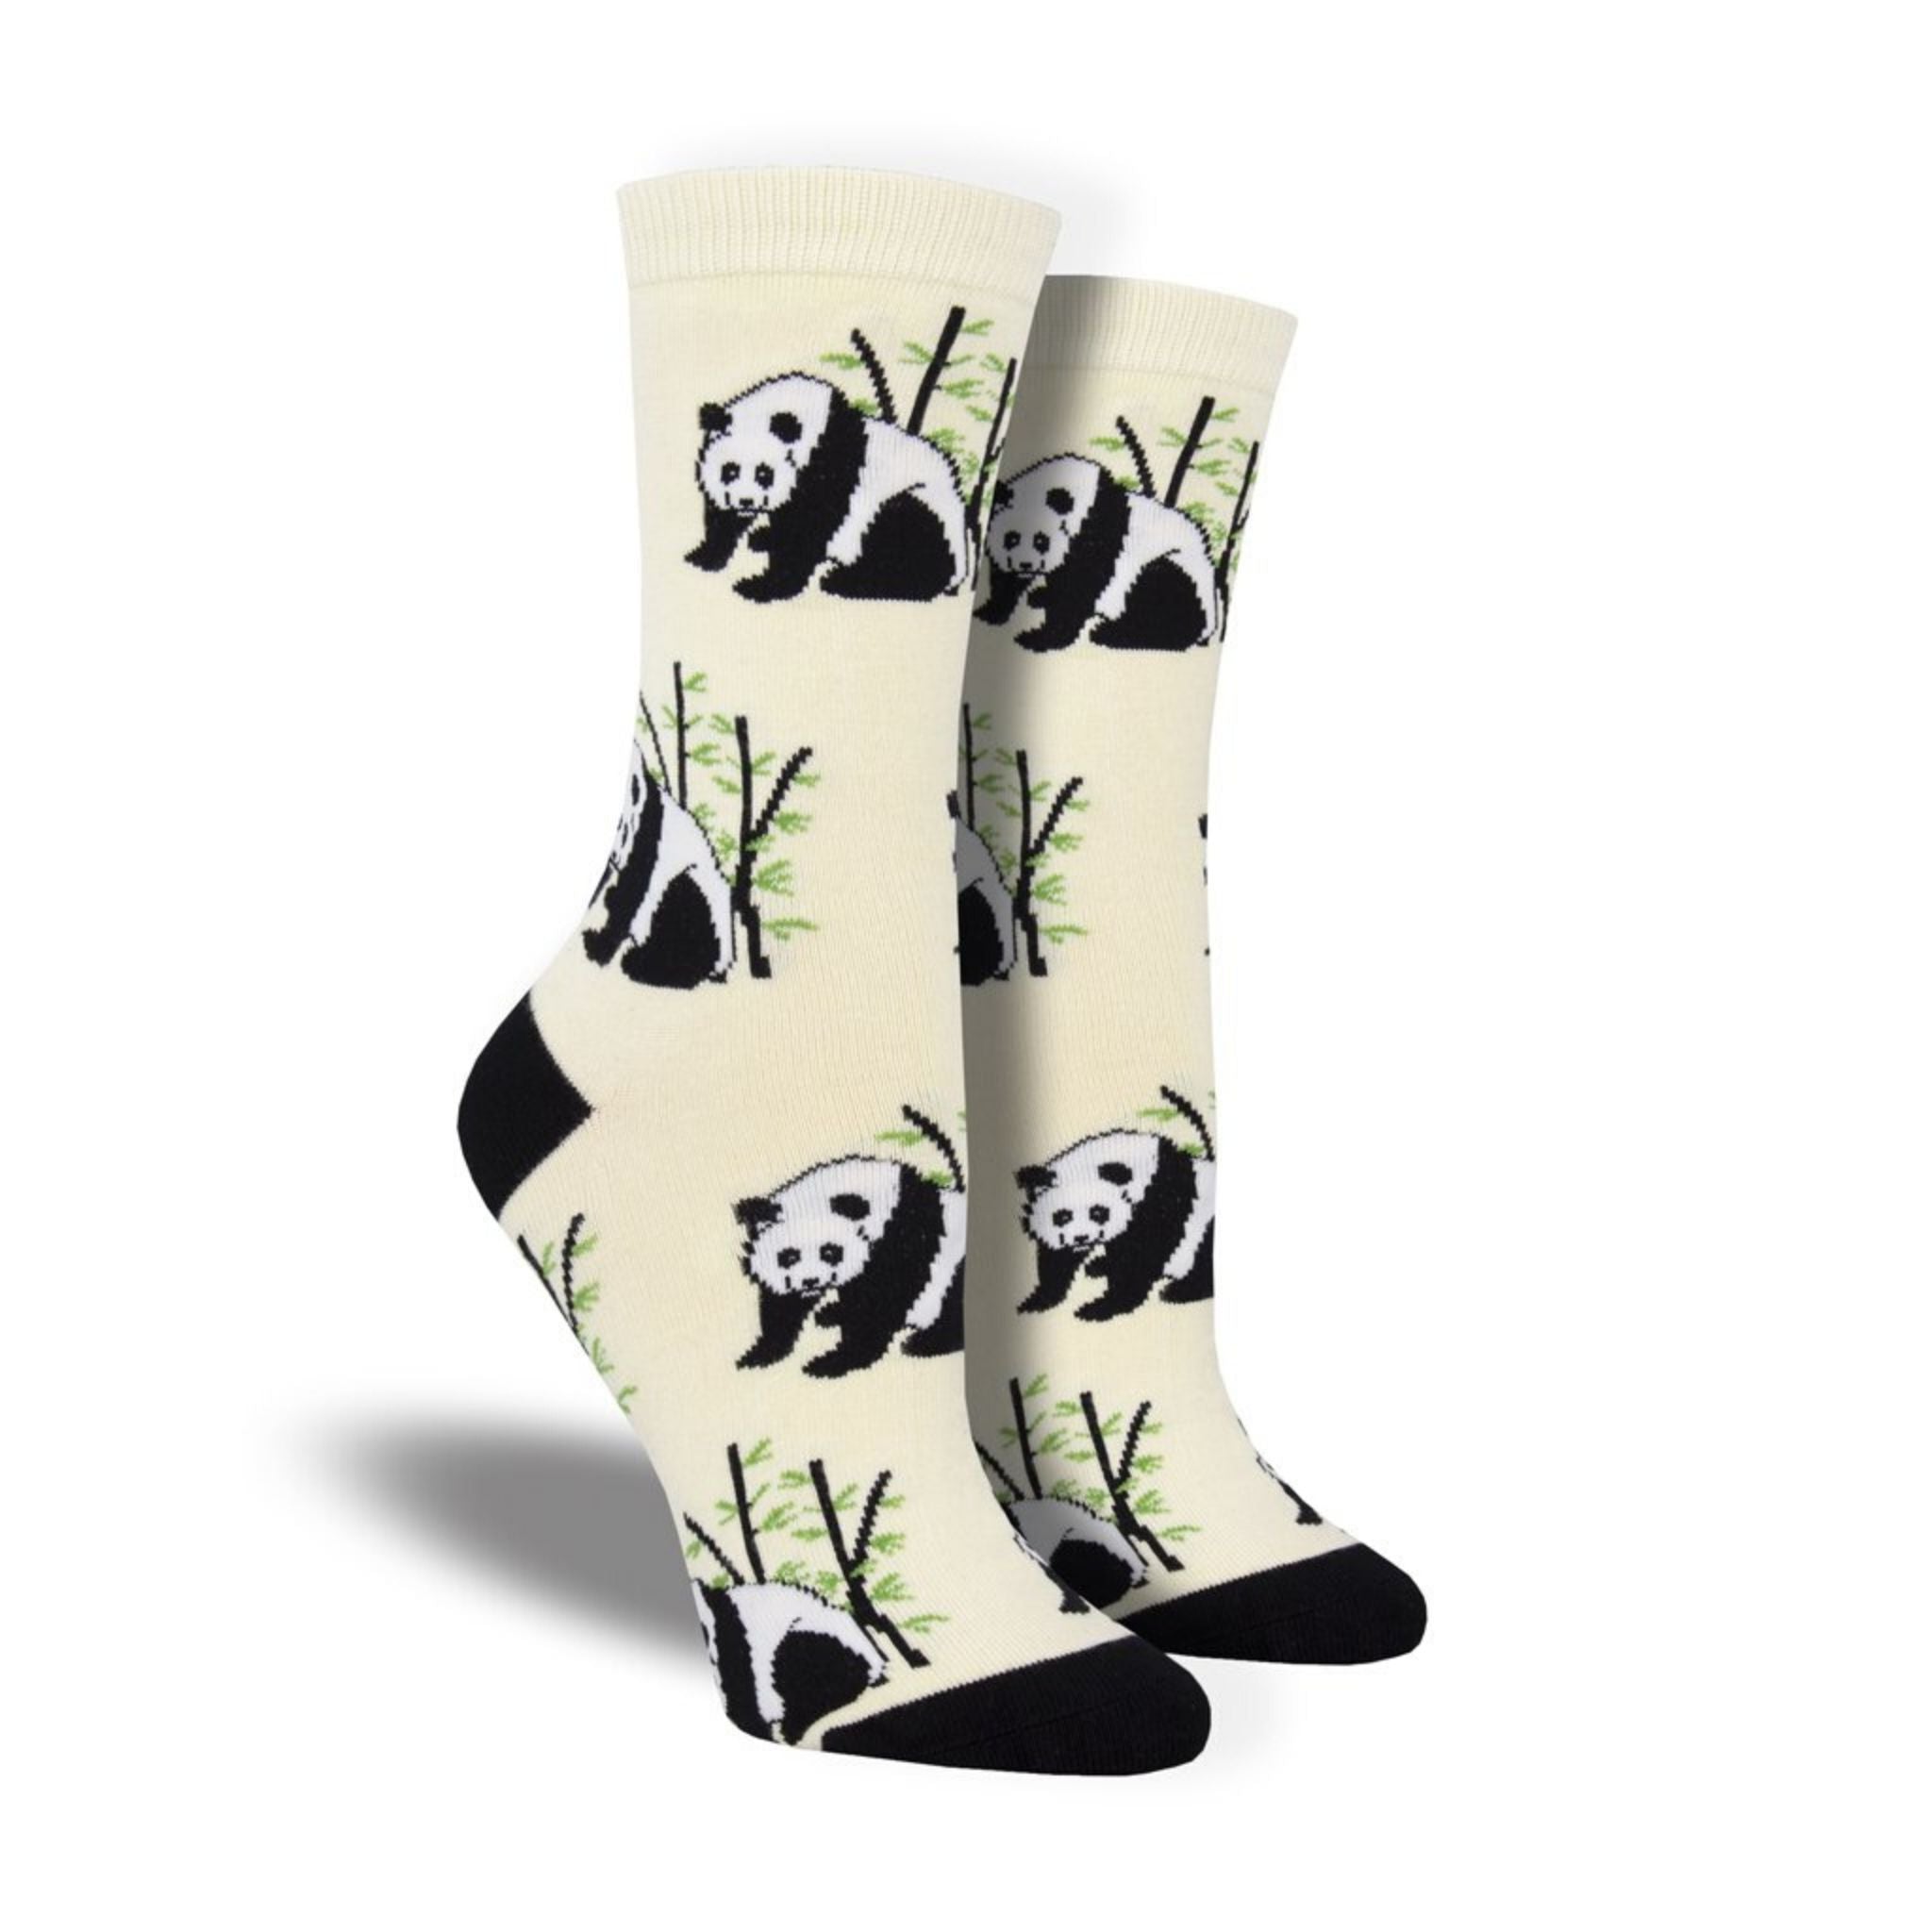 White  socks featuring panda bears by bamboo stacks